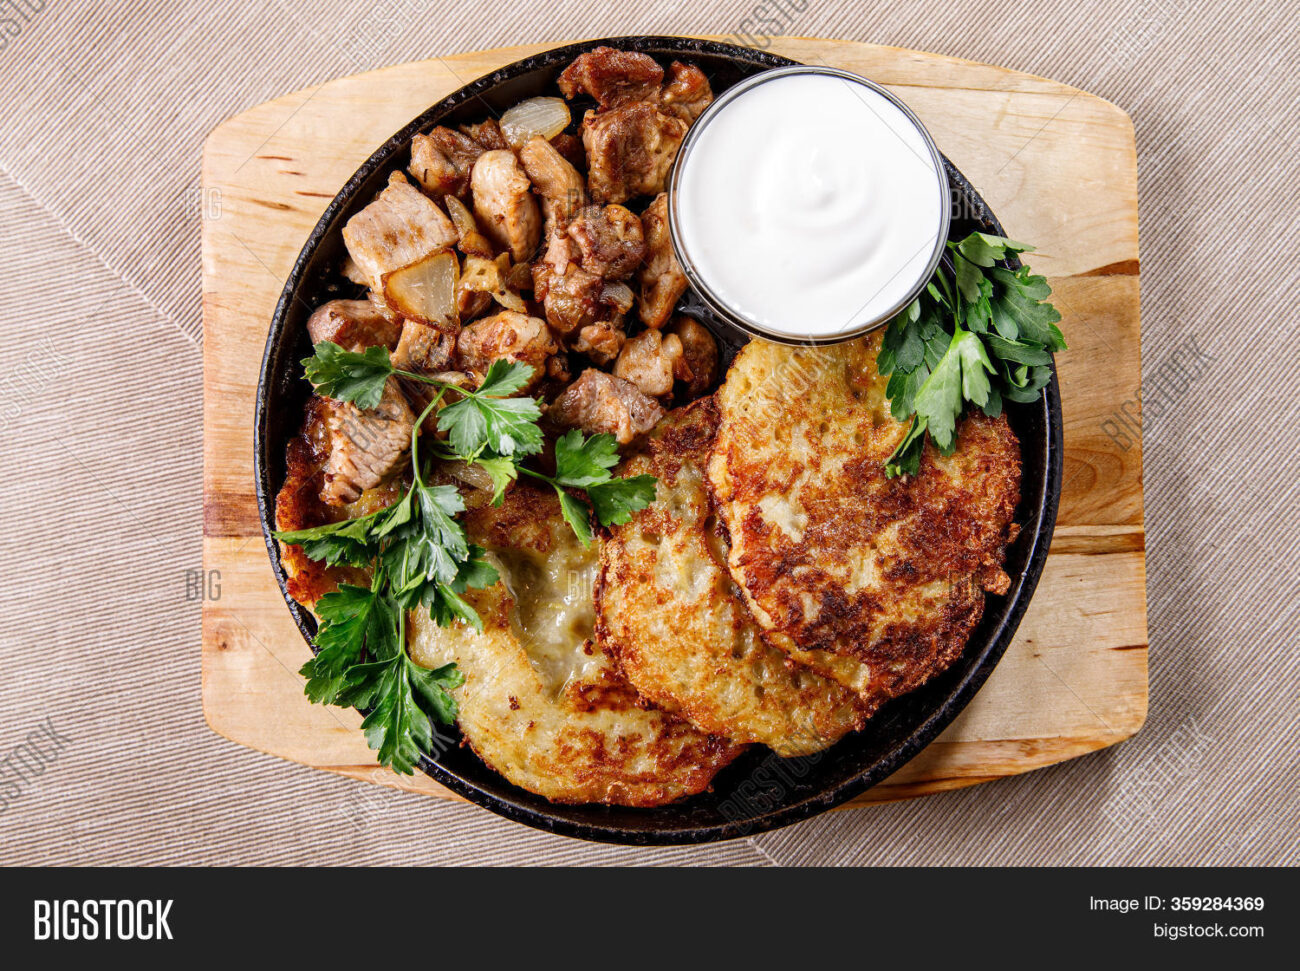 potato pancake with chicken and mushrooms